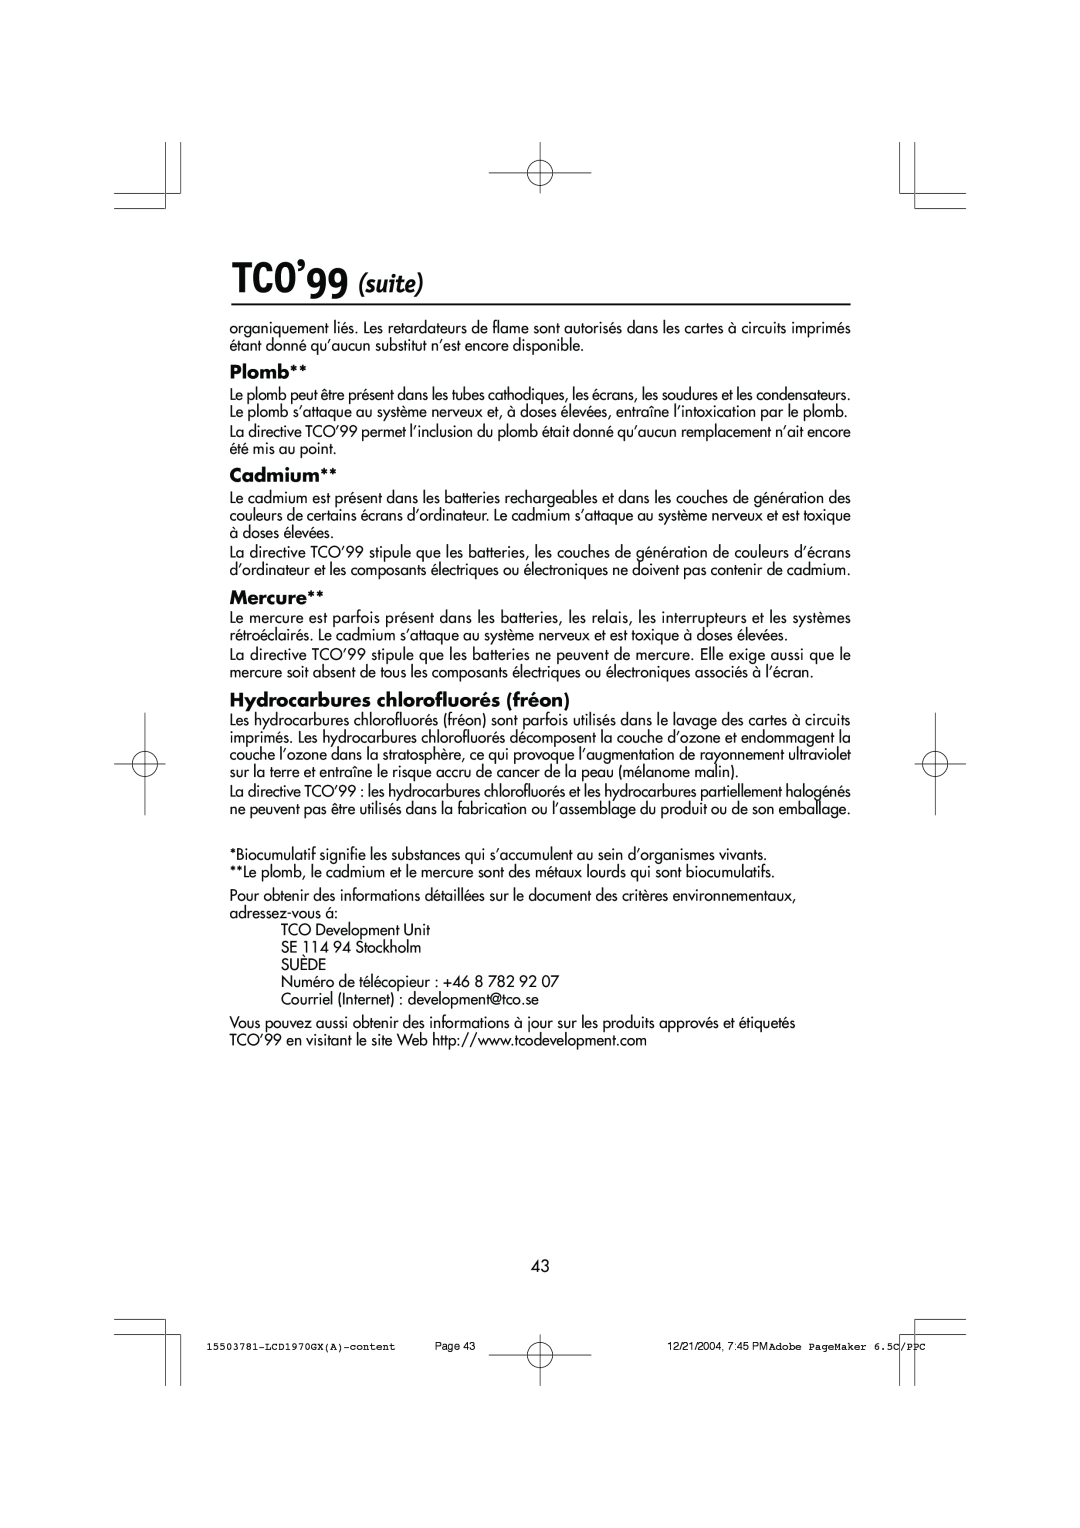 NEC LCD1970GX user manual TCO’99 suite, Plomb, Cadmium, Mercure, Hydrocarbures chlorofluorés fréon 